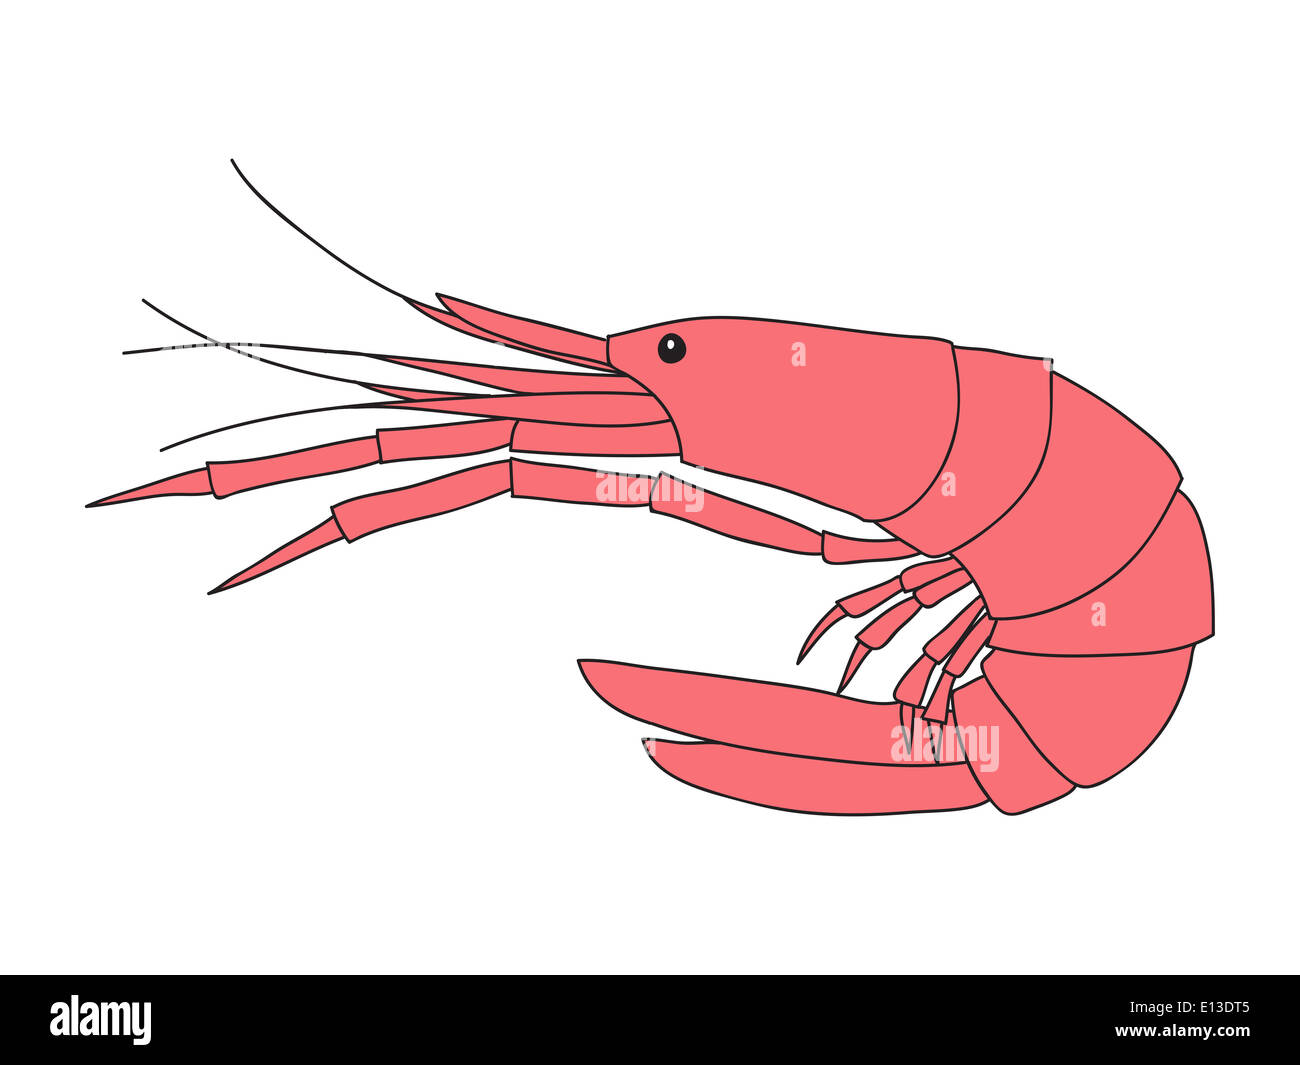 Shrimp illustration Stock Photo